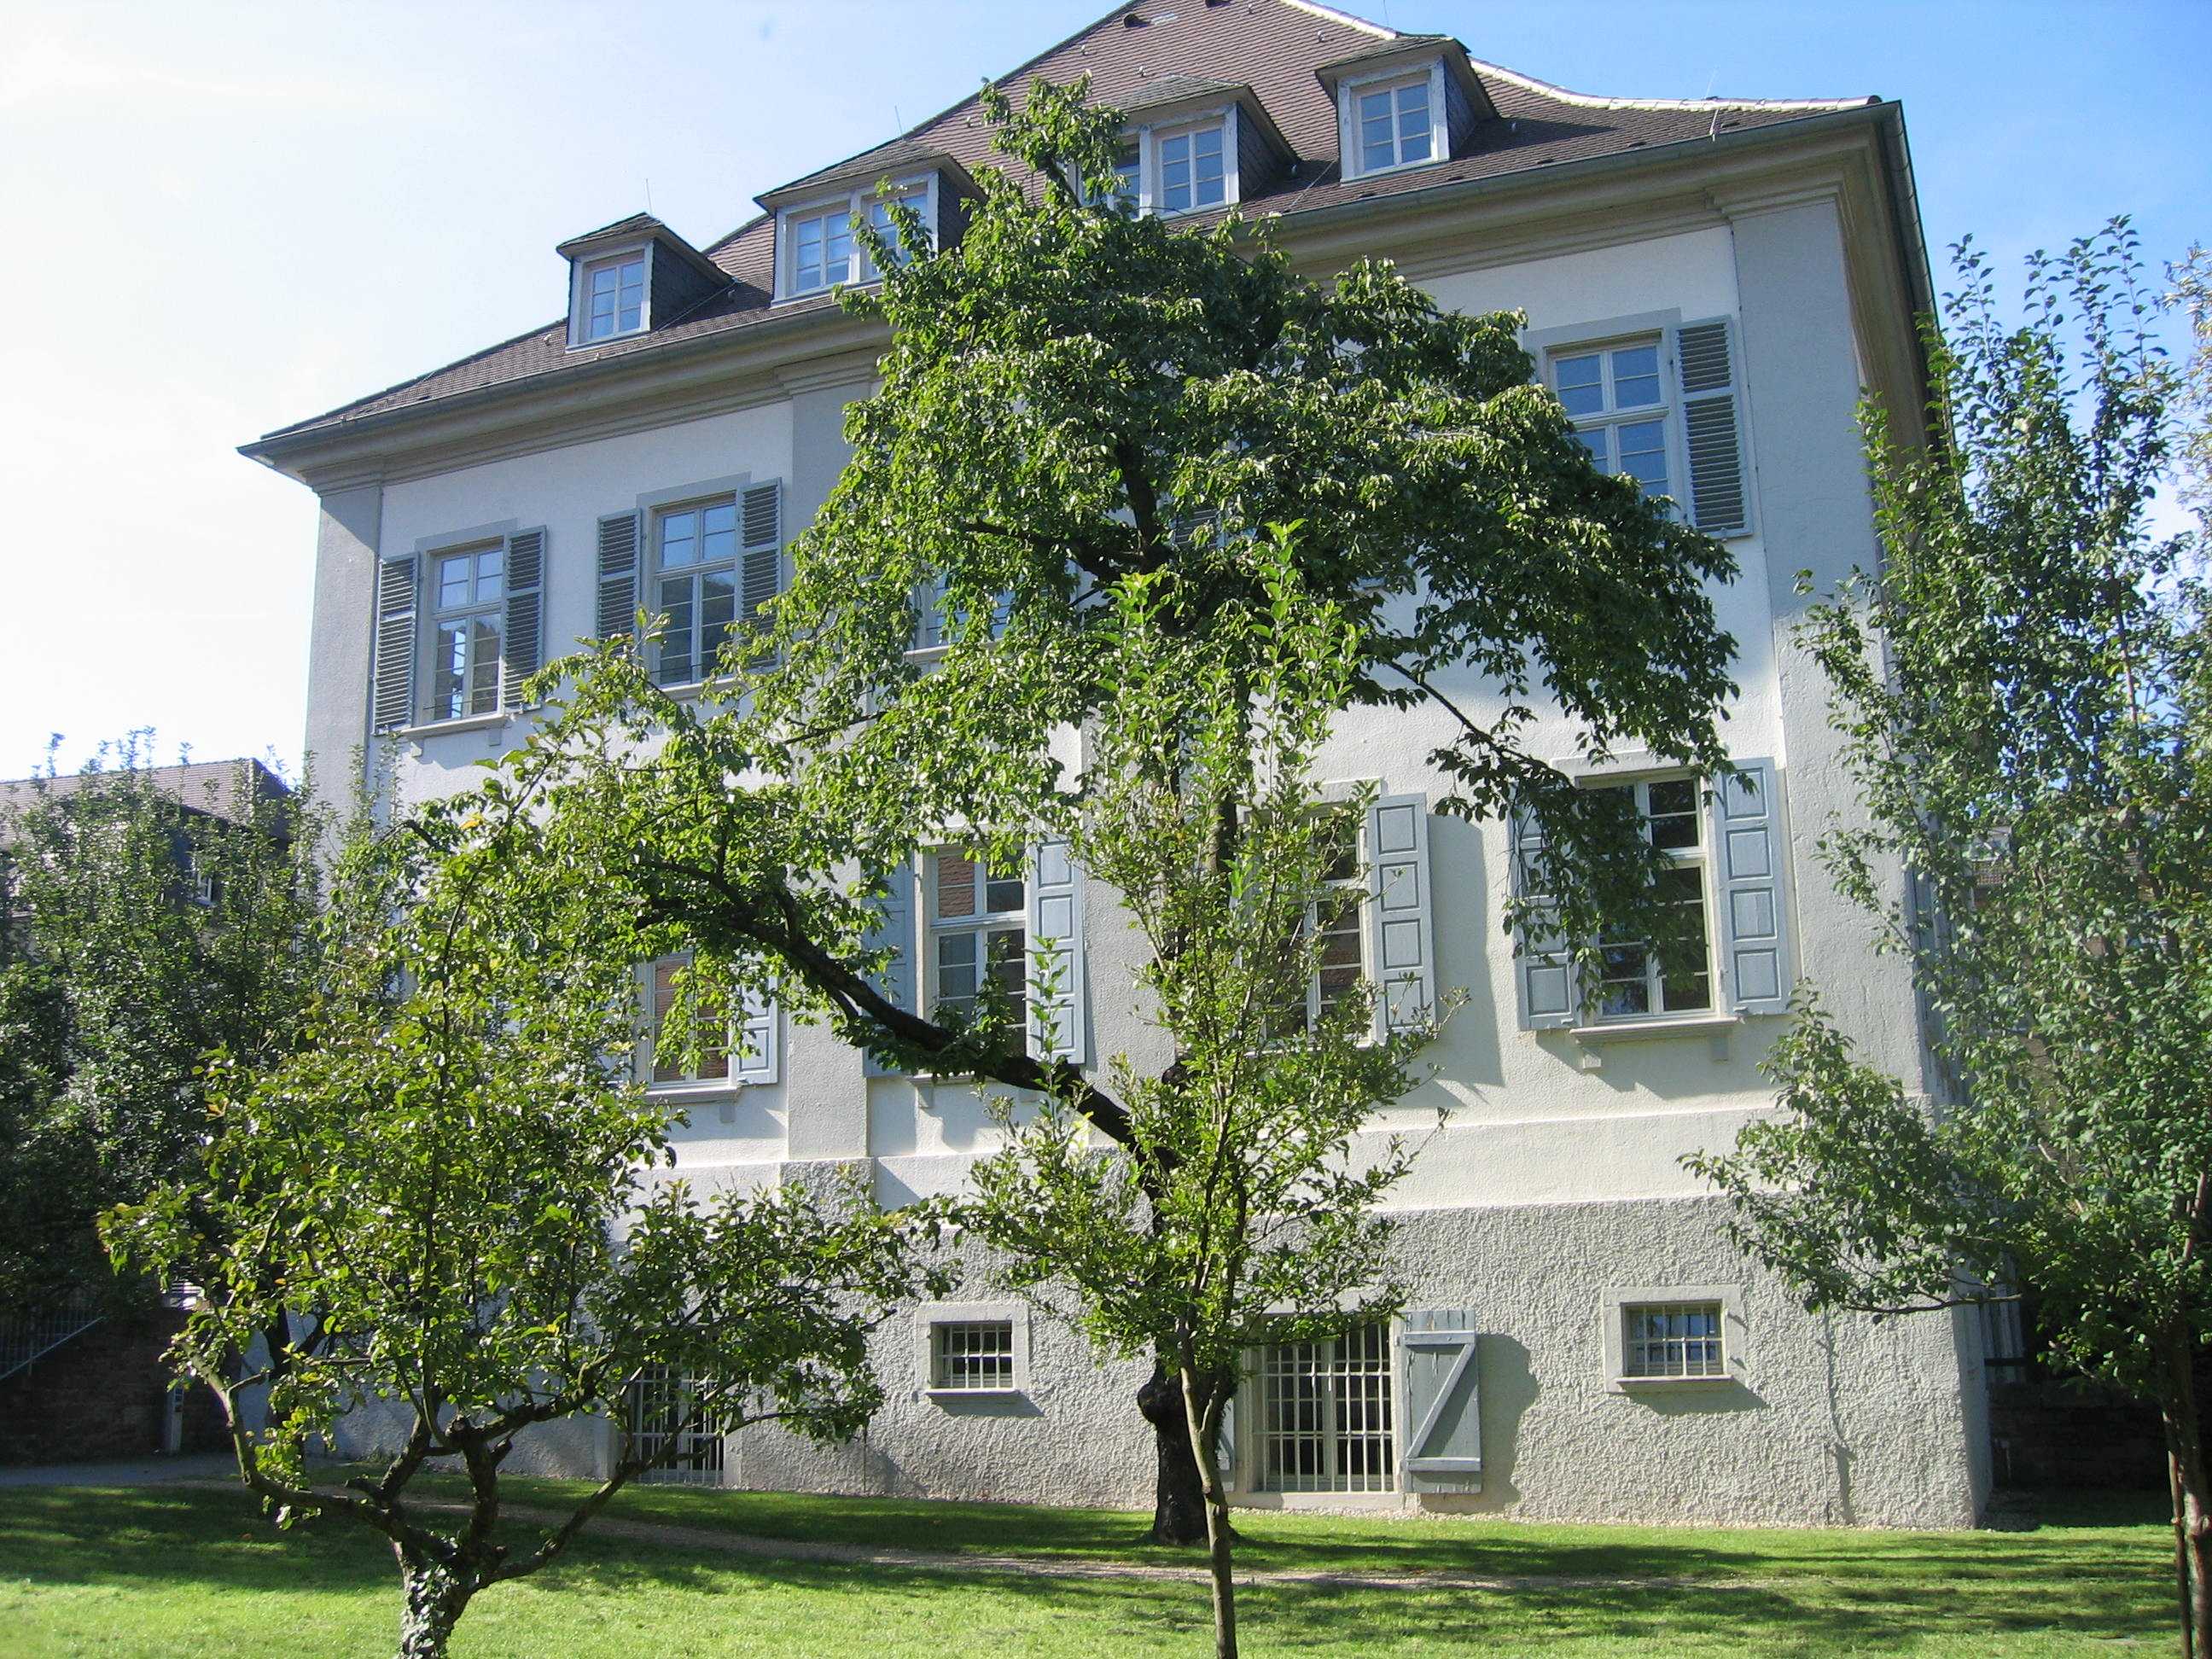 Schmitthennerhaus